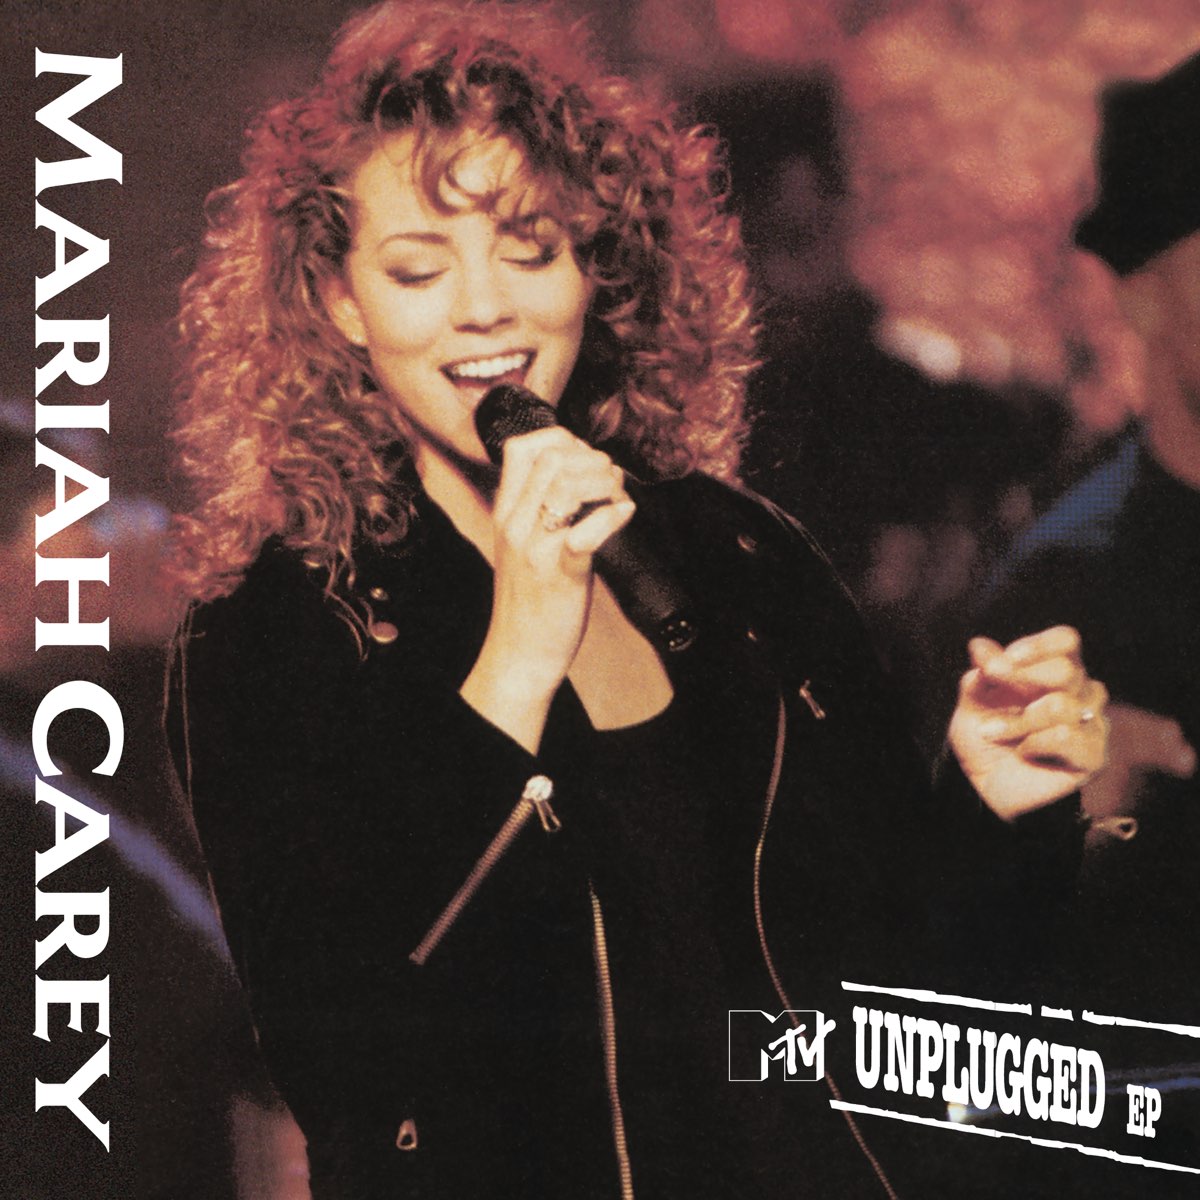 ‎MTV Unplugged: Mariah Carey (Live) - EP by Mariah Carey on Apple Music